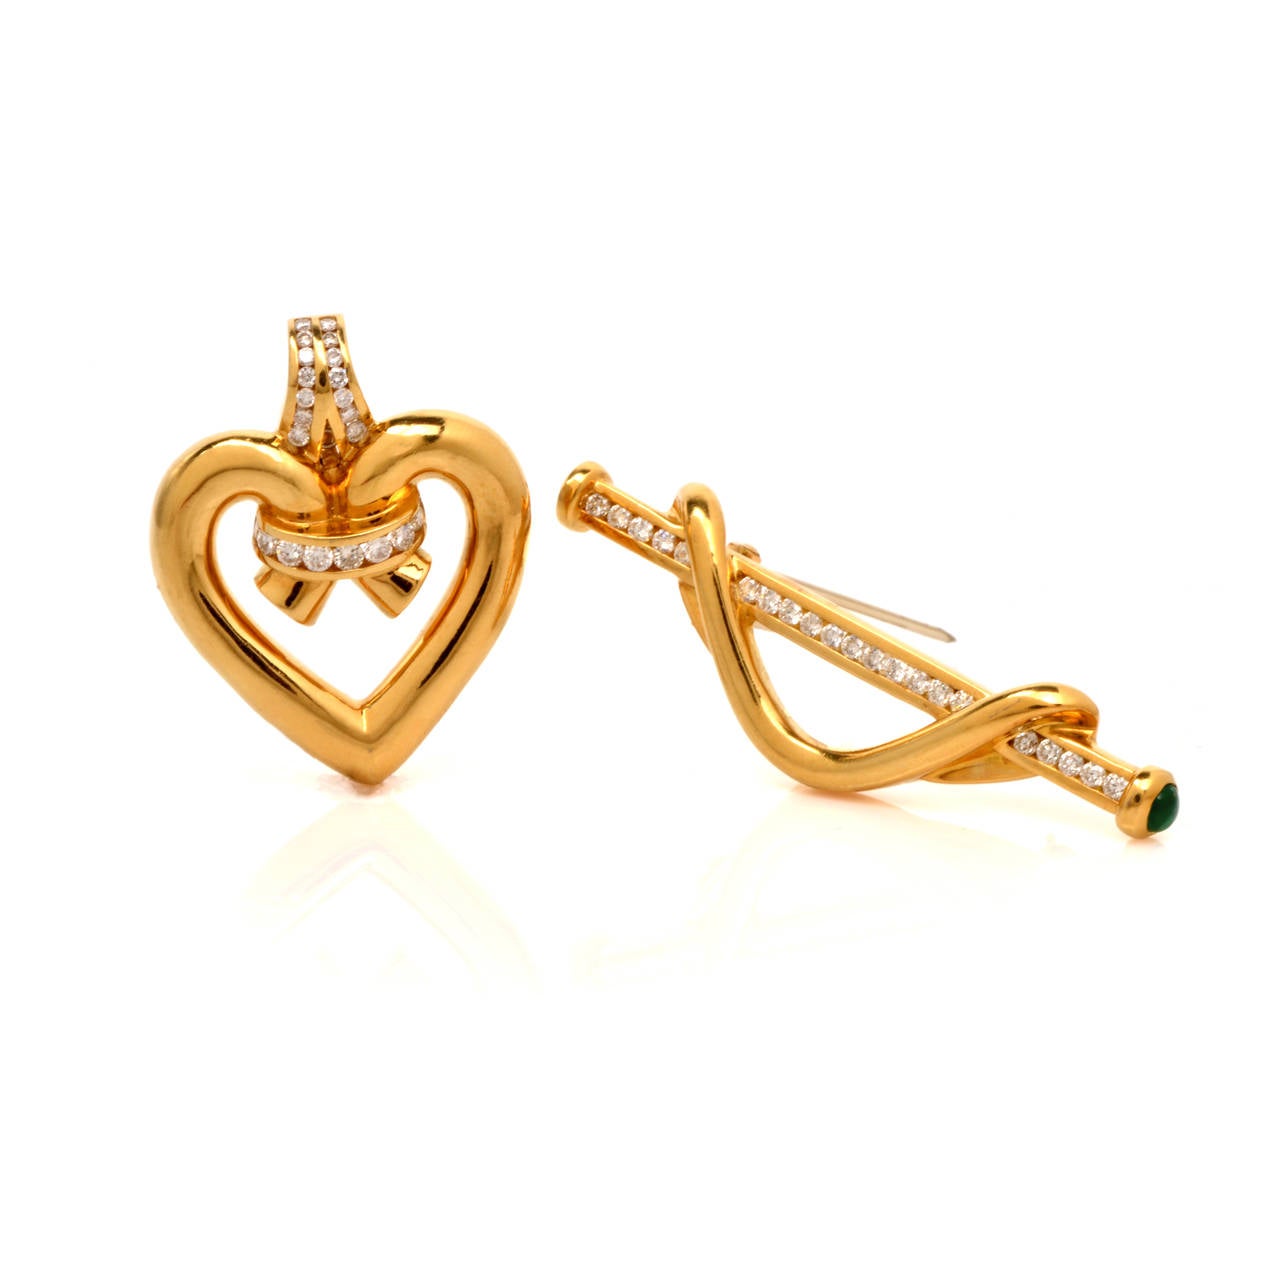 Krypell Emerald Diamond Gold Heart Pendant Brooch Pin 2